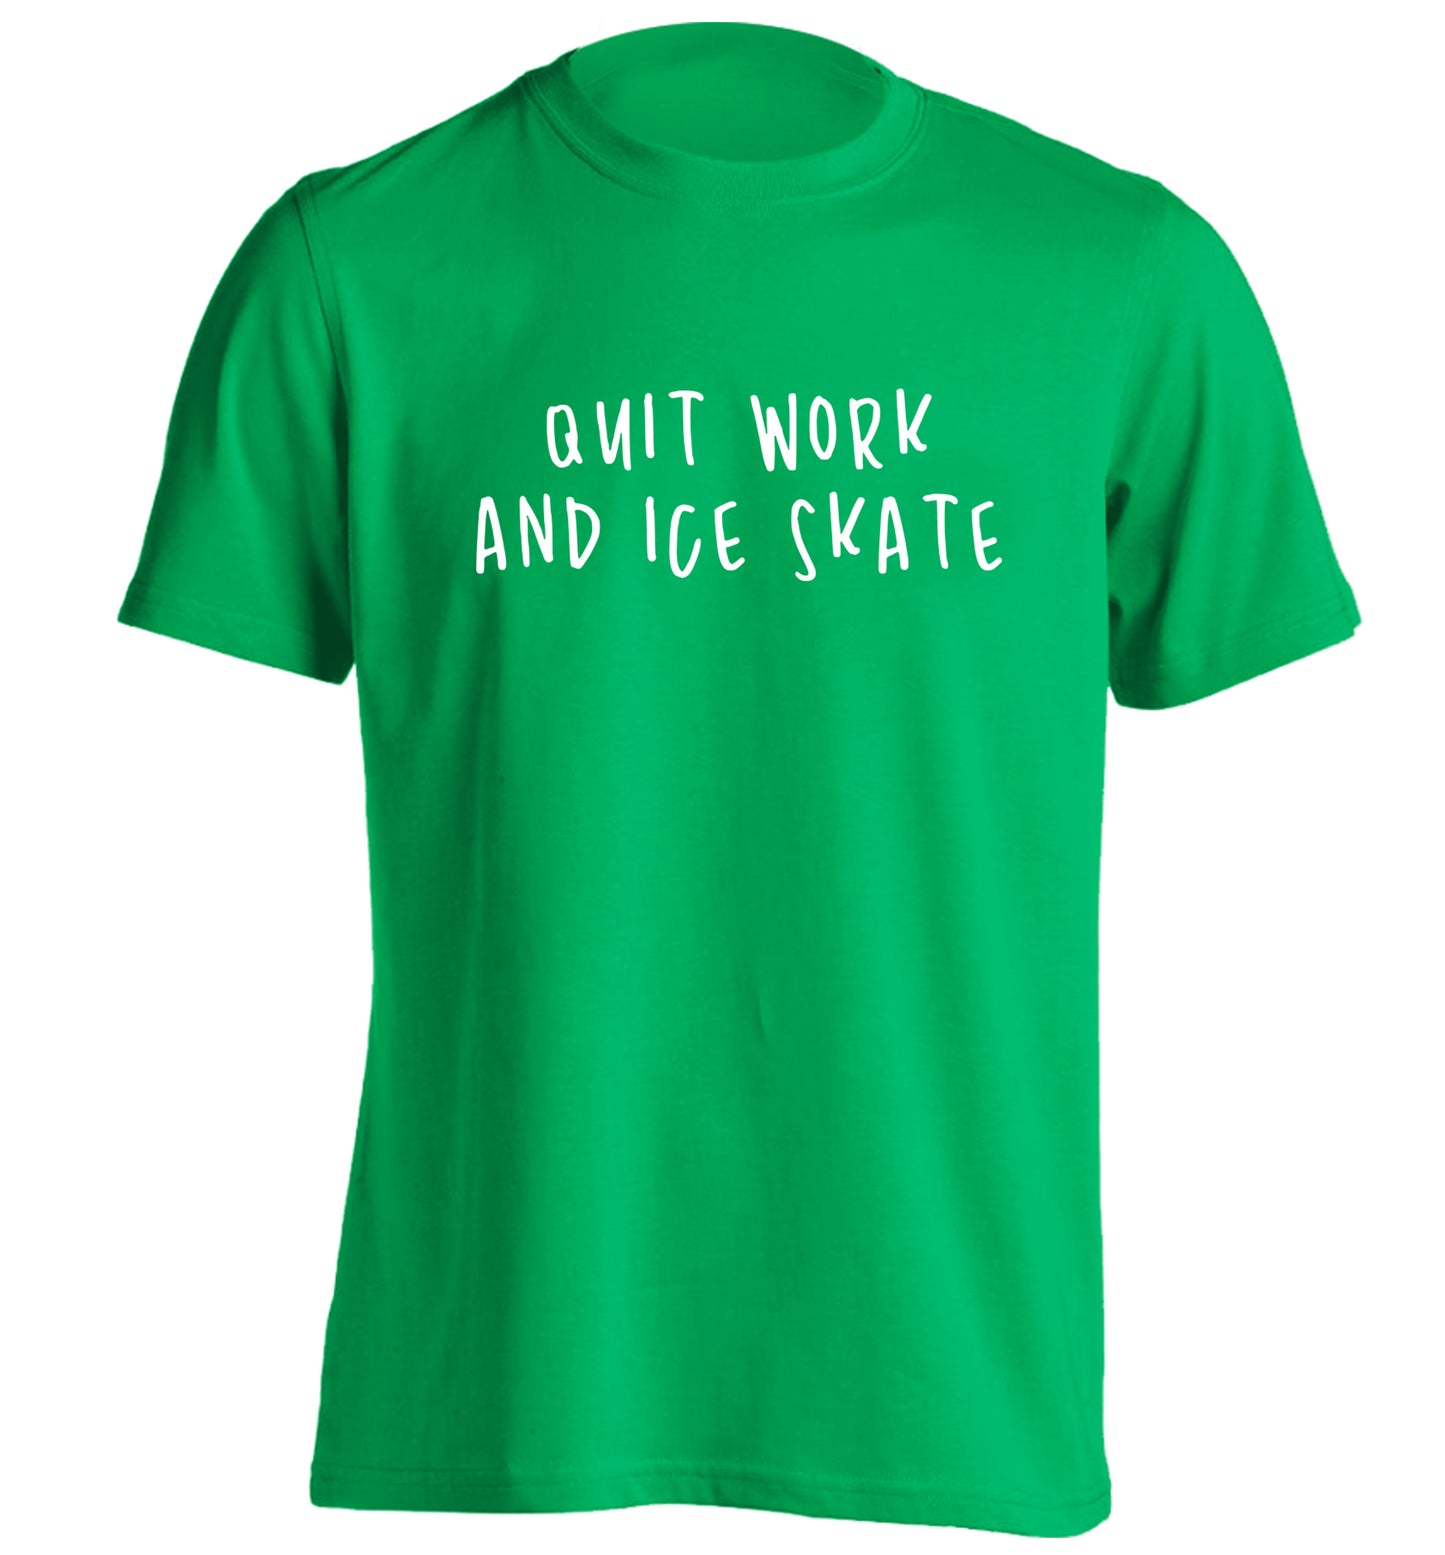 Quit work ice skate adults unisexgreen Tshirt 2XL